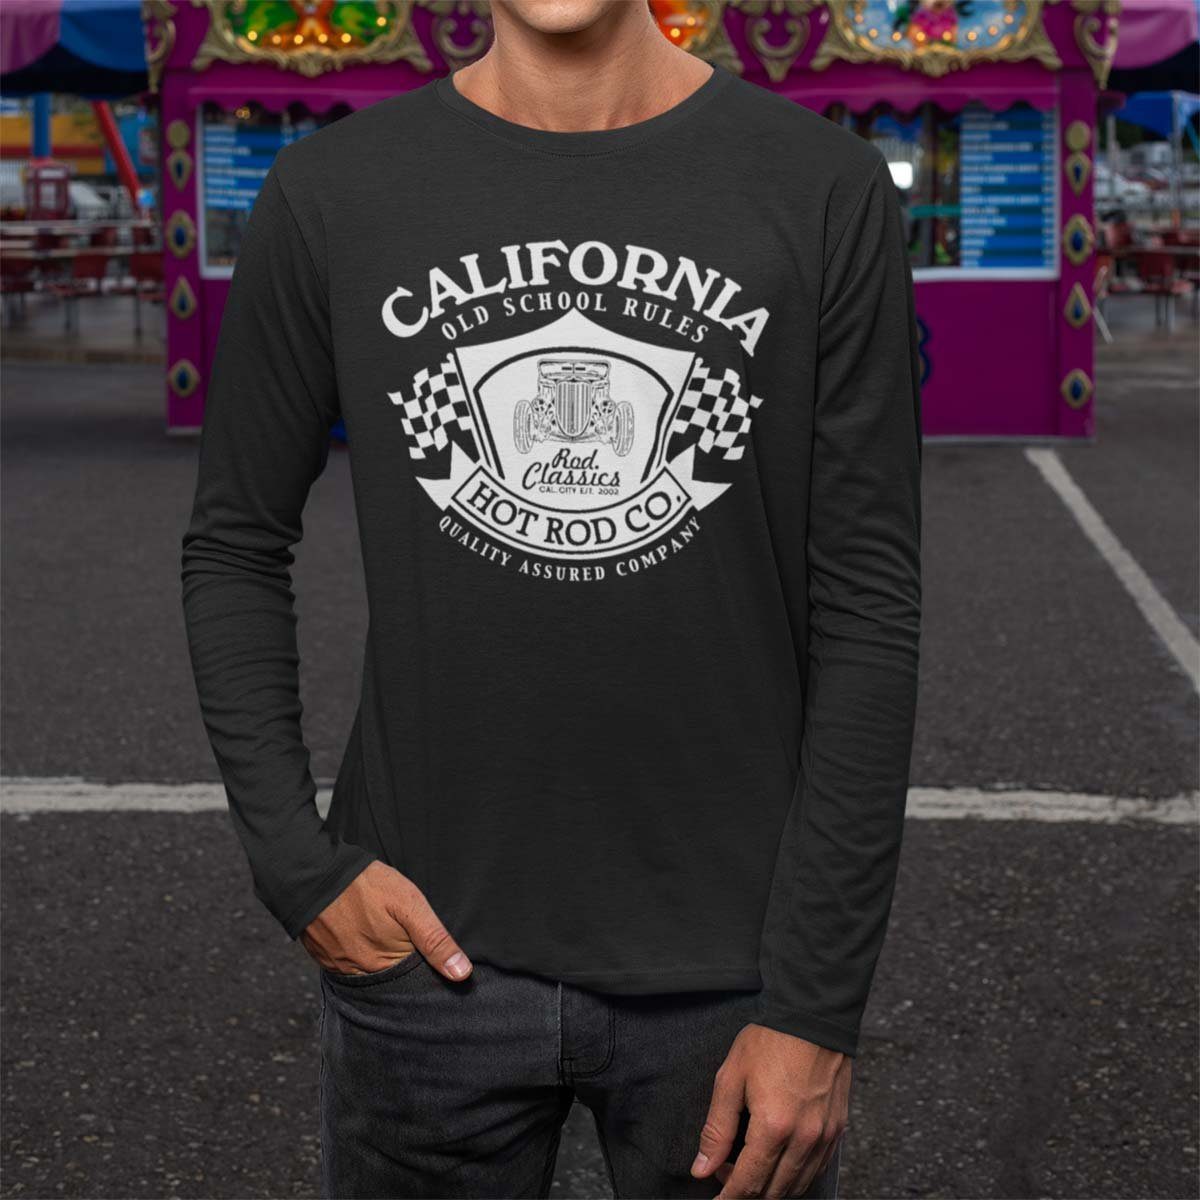 Herren T-Shirt Langarm / mit Grau Wheels Rebel US-Car Tee Motiv Longsleeve Hotrod On Longsleeve Melange Hotrod California